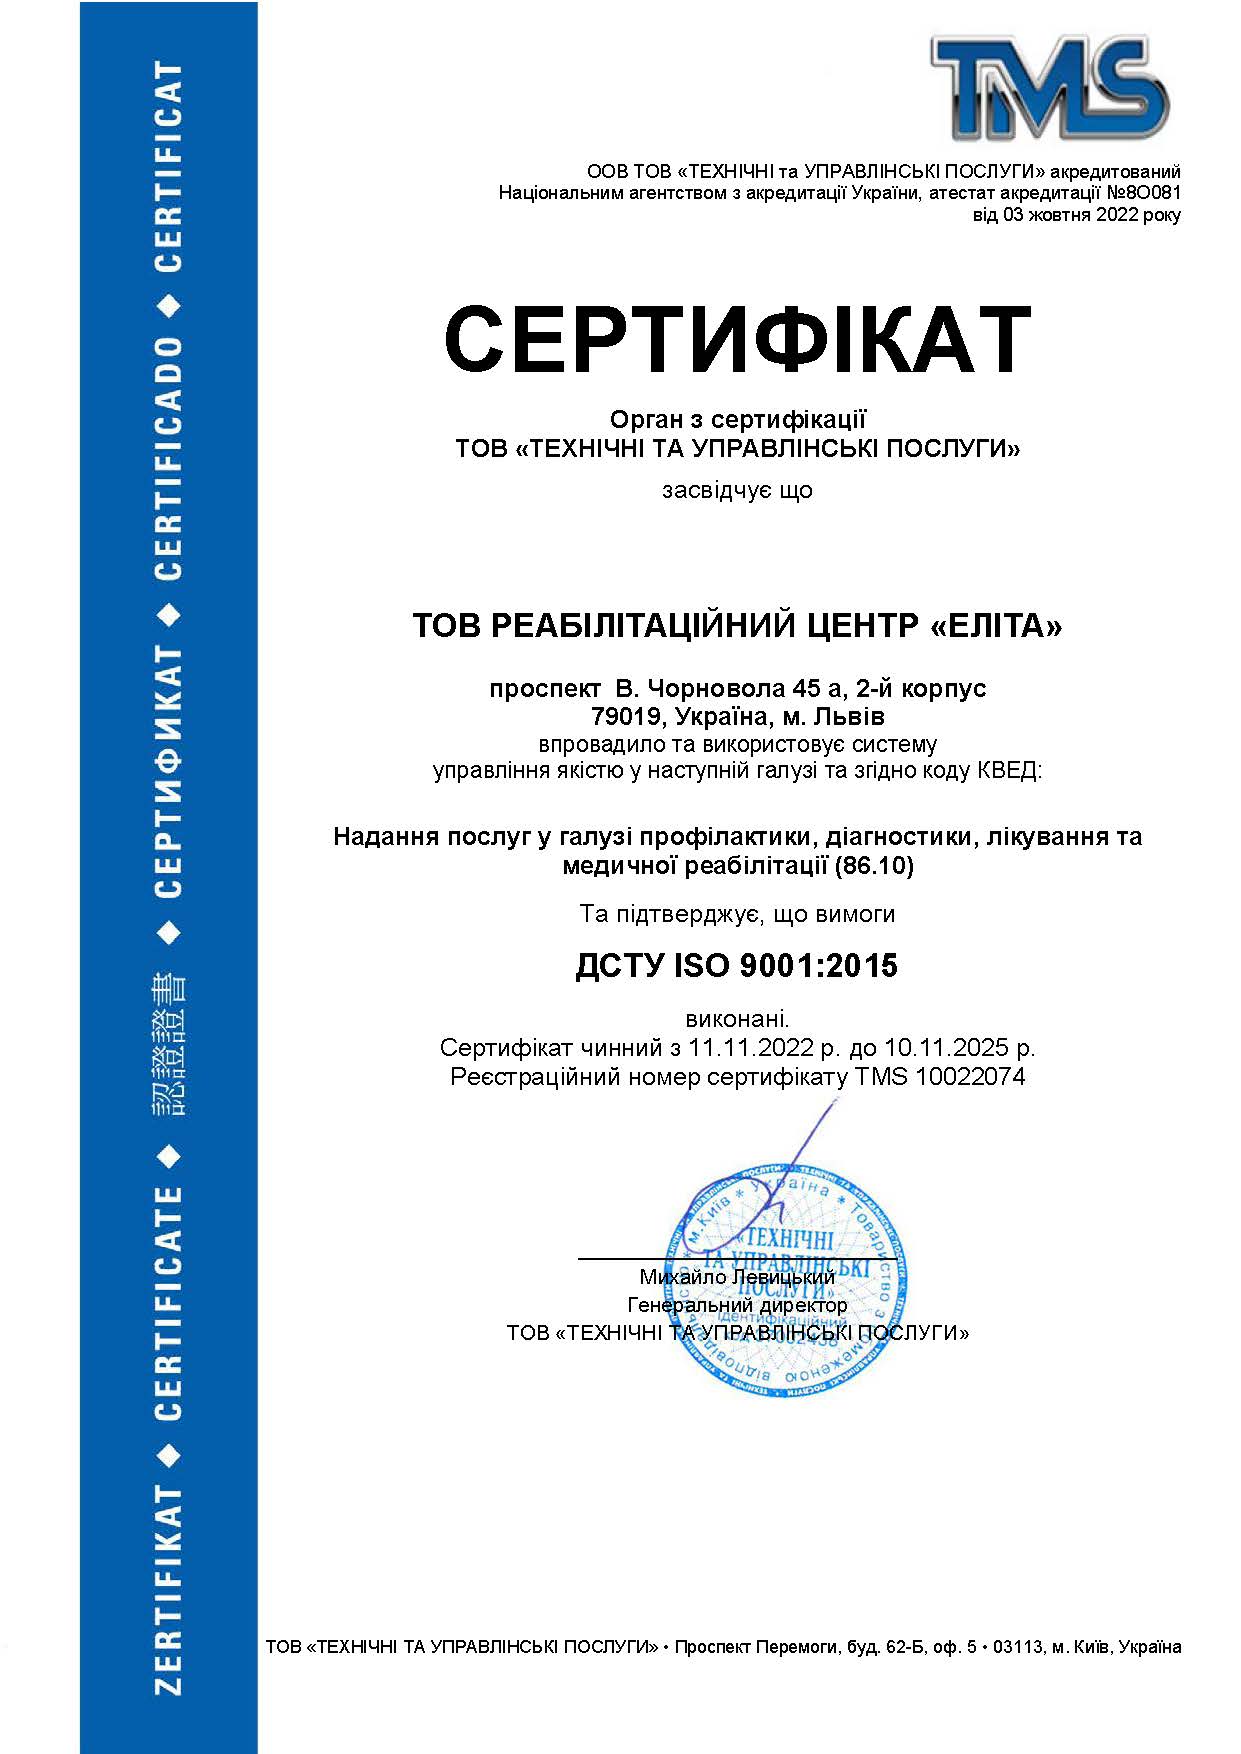 ДСТУ ISO 9001:2015